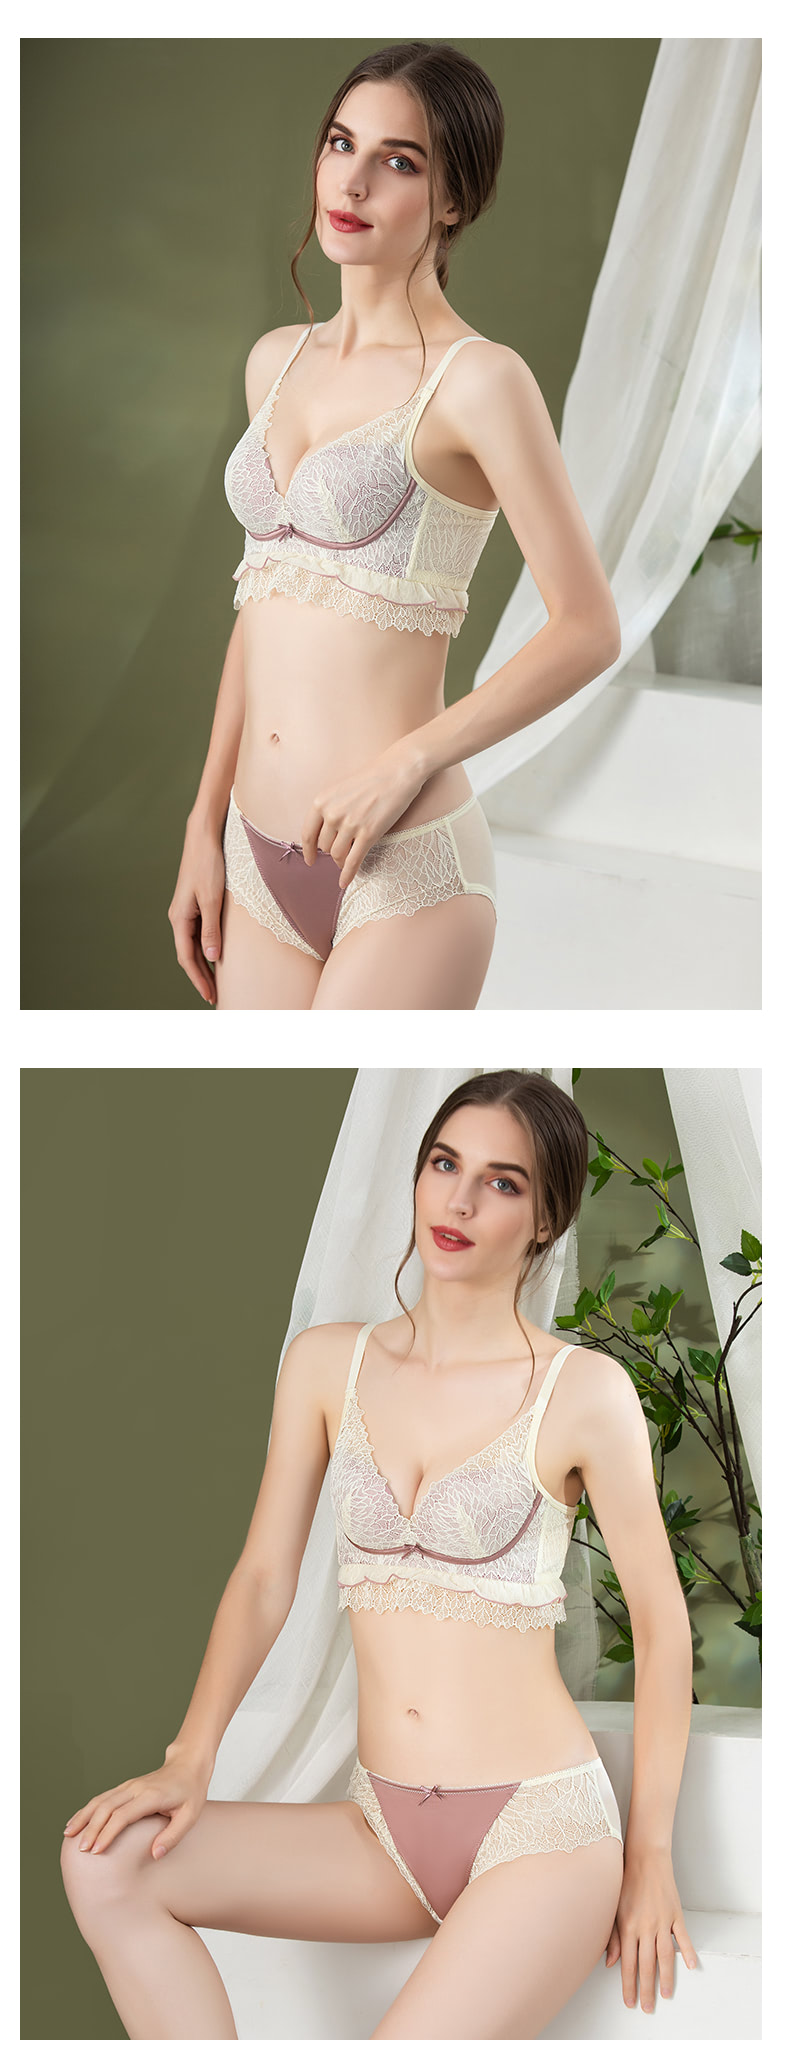 Sexy-Lingerie-Push-Up-Wireless-Bra-and-Panties-Lace-Underwear12.jpg